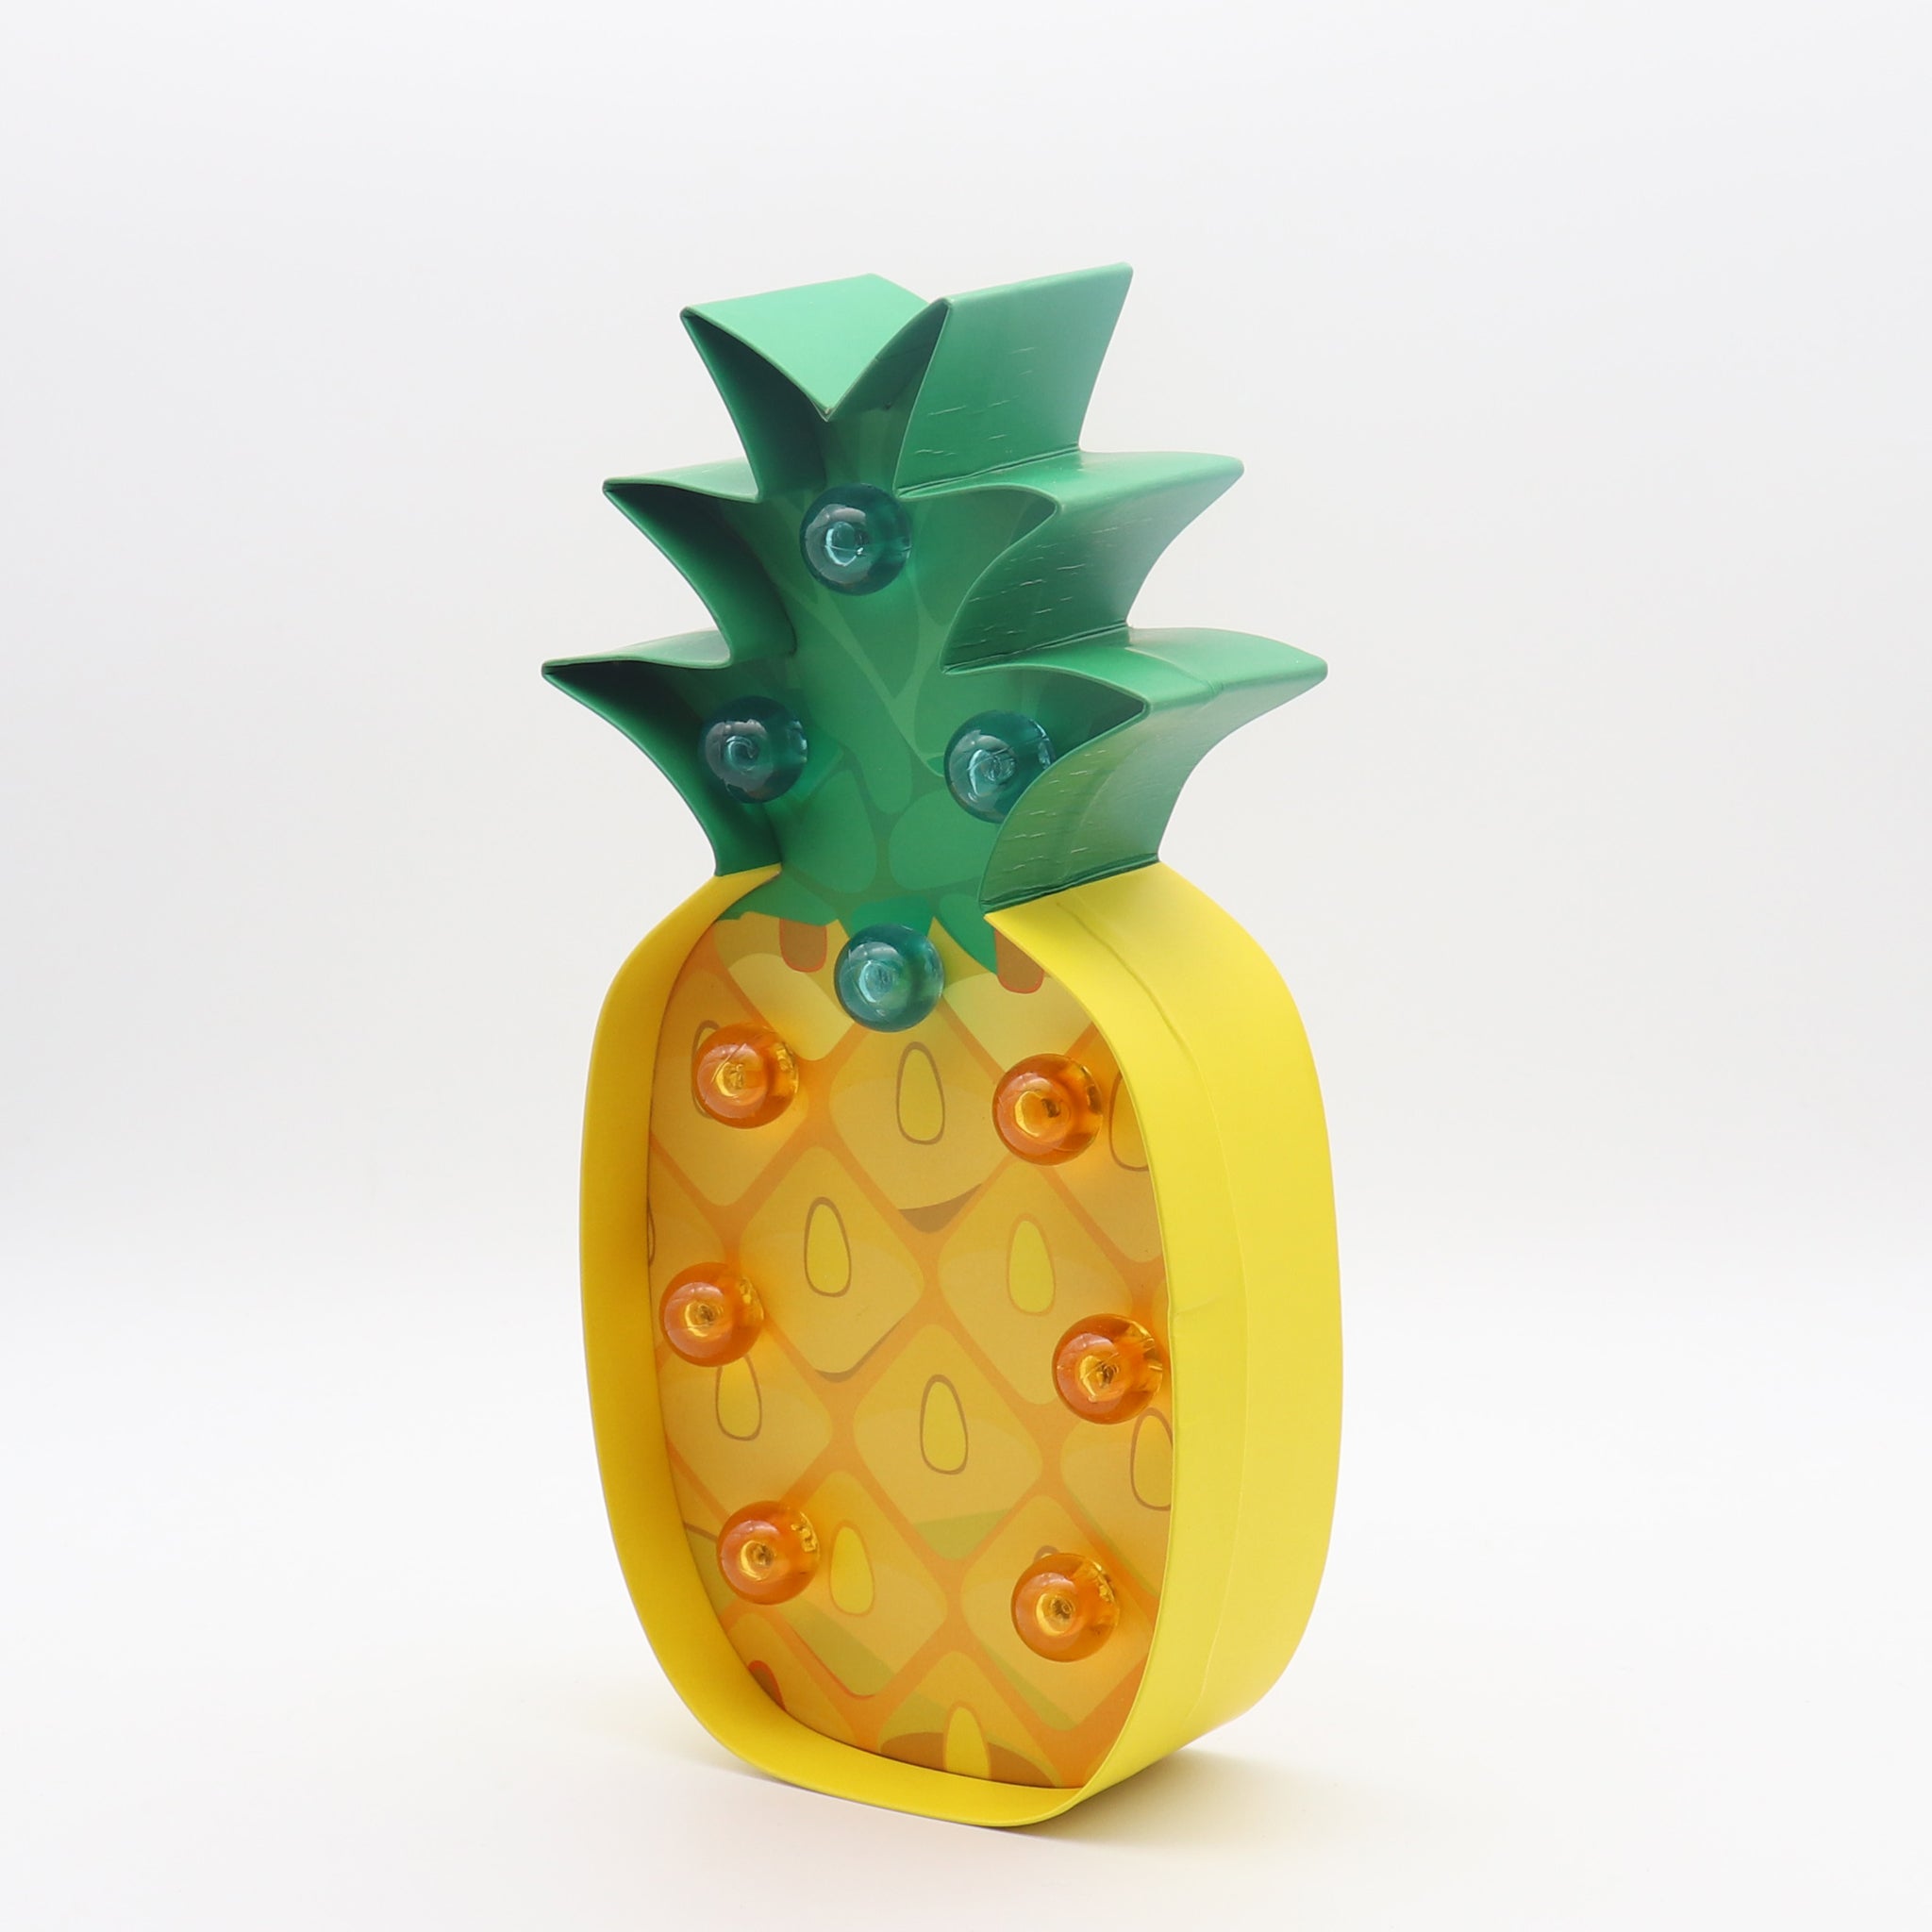 3D Printed Pineapple Light